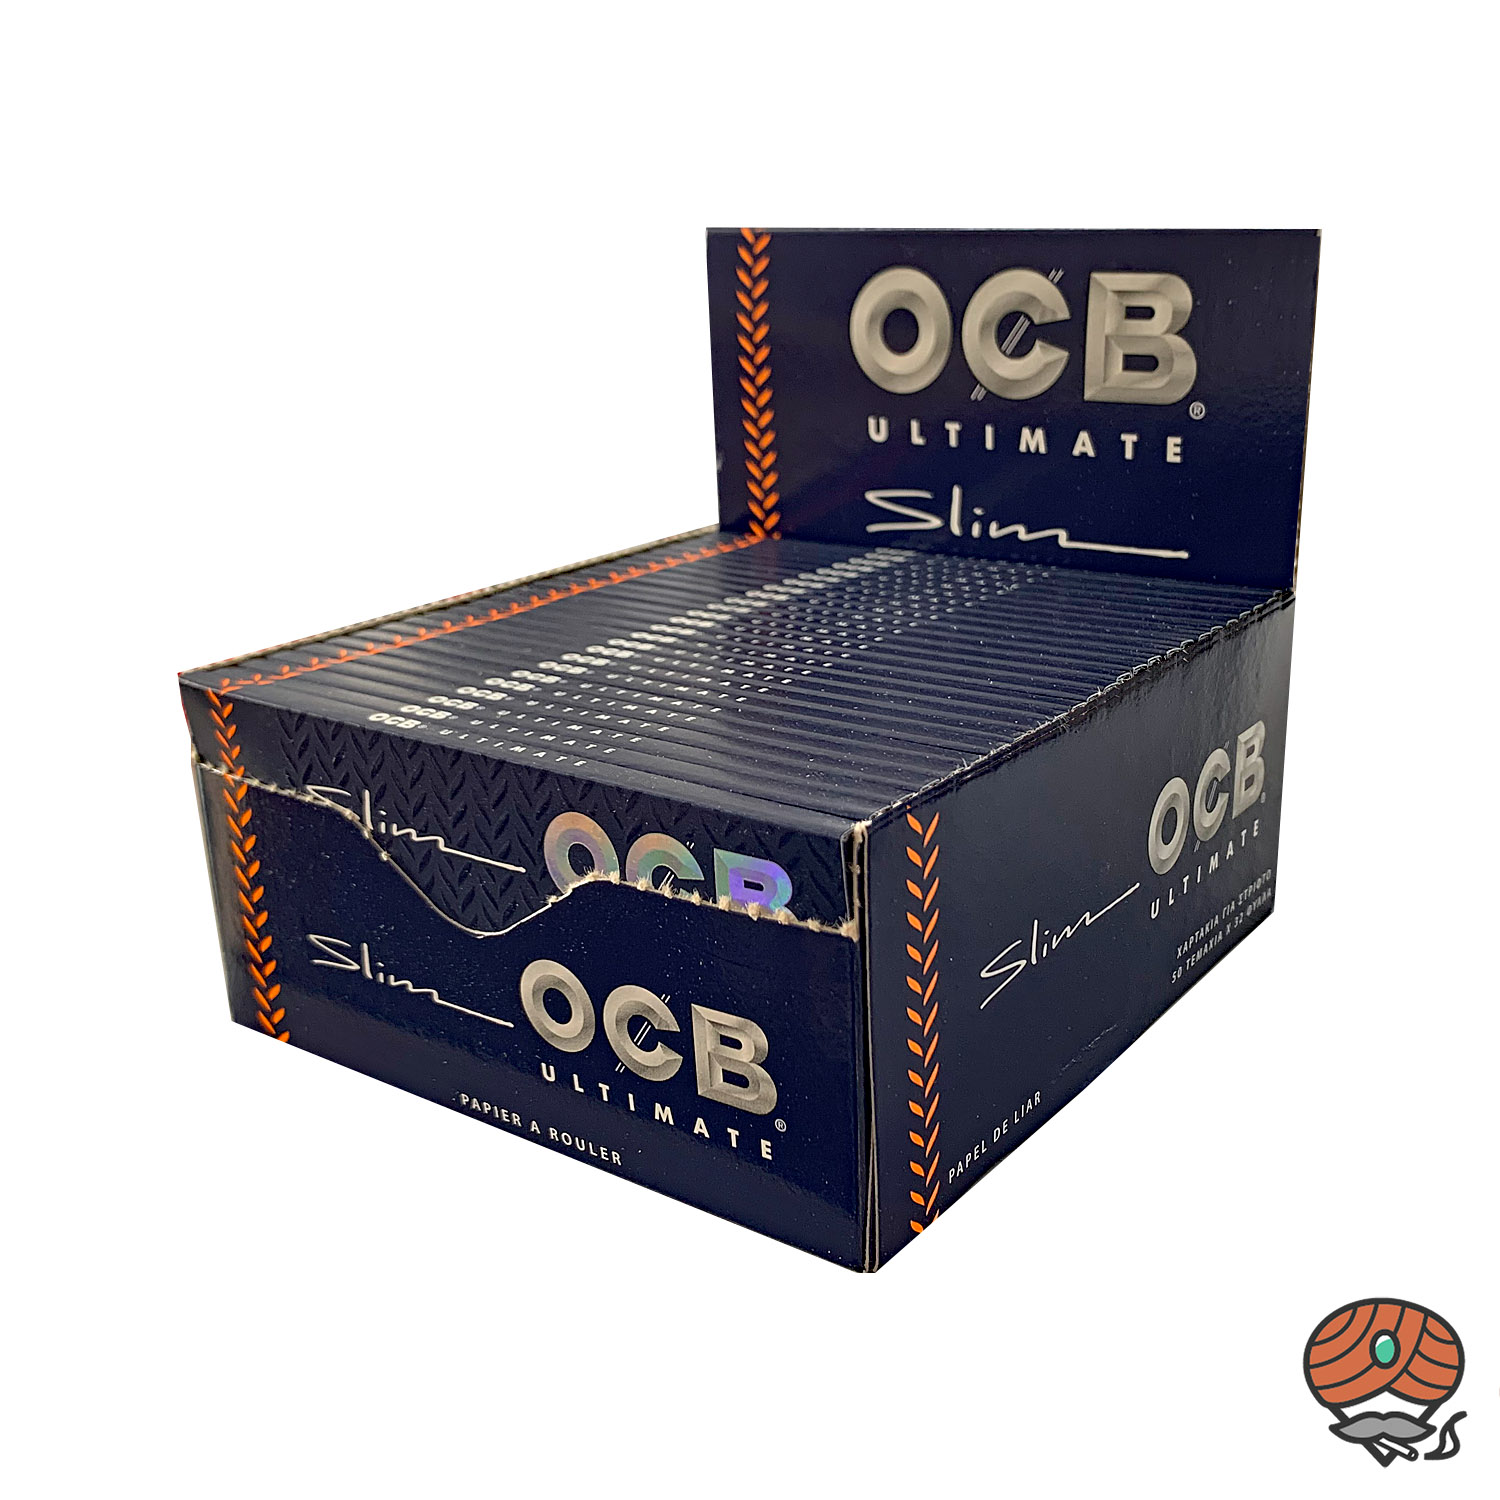 OCB Ultimate Slim Zigarettenpapier 50 Hefte à 32 Blatt